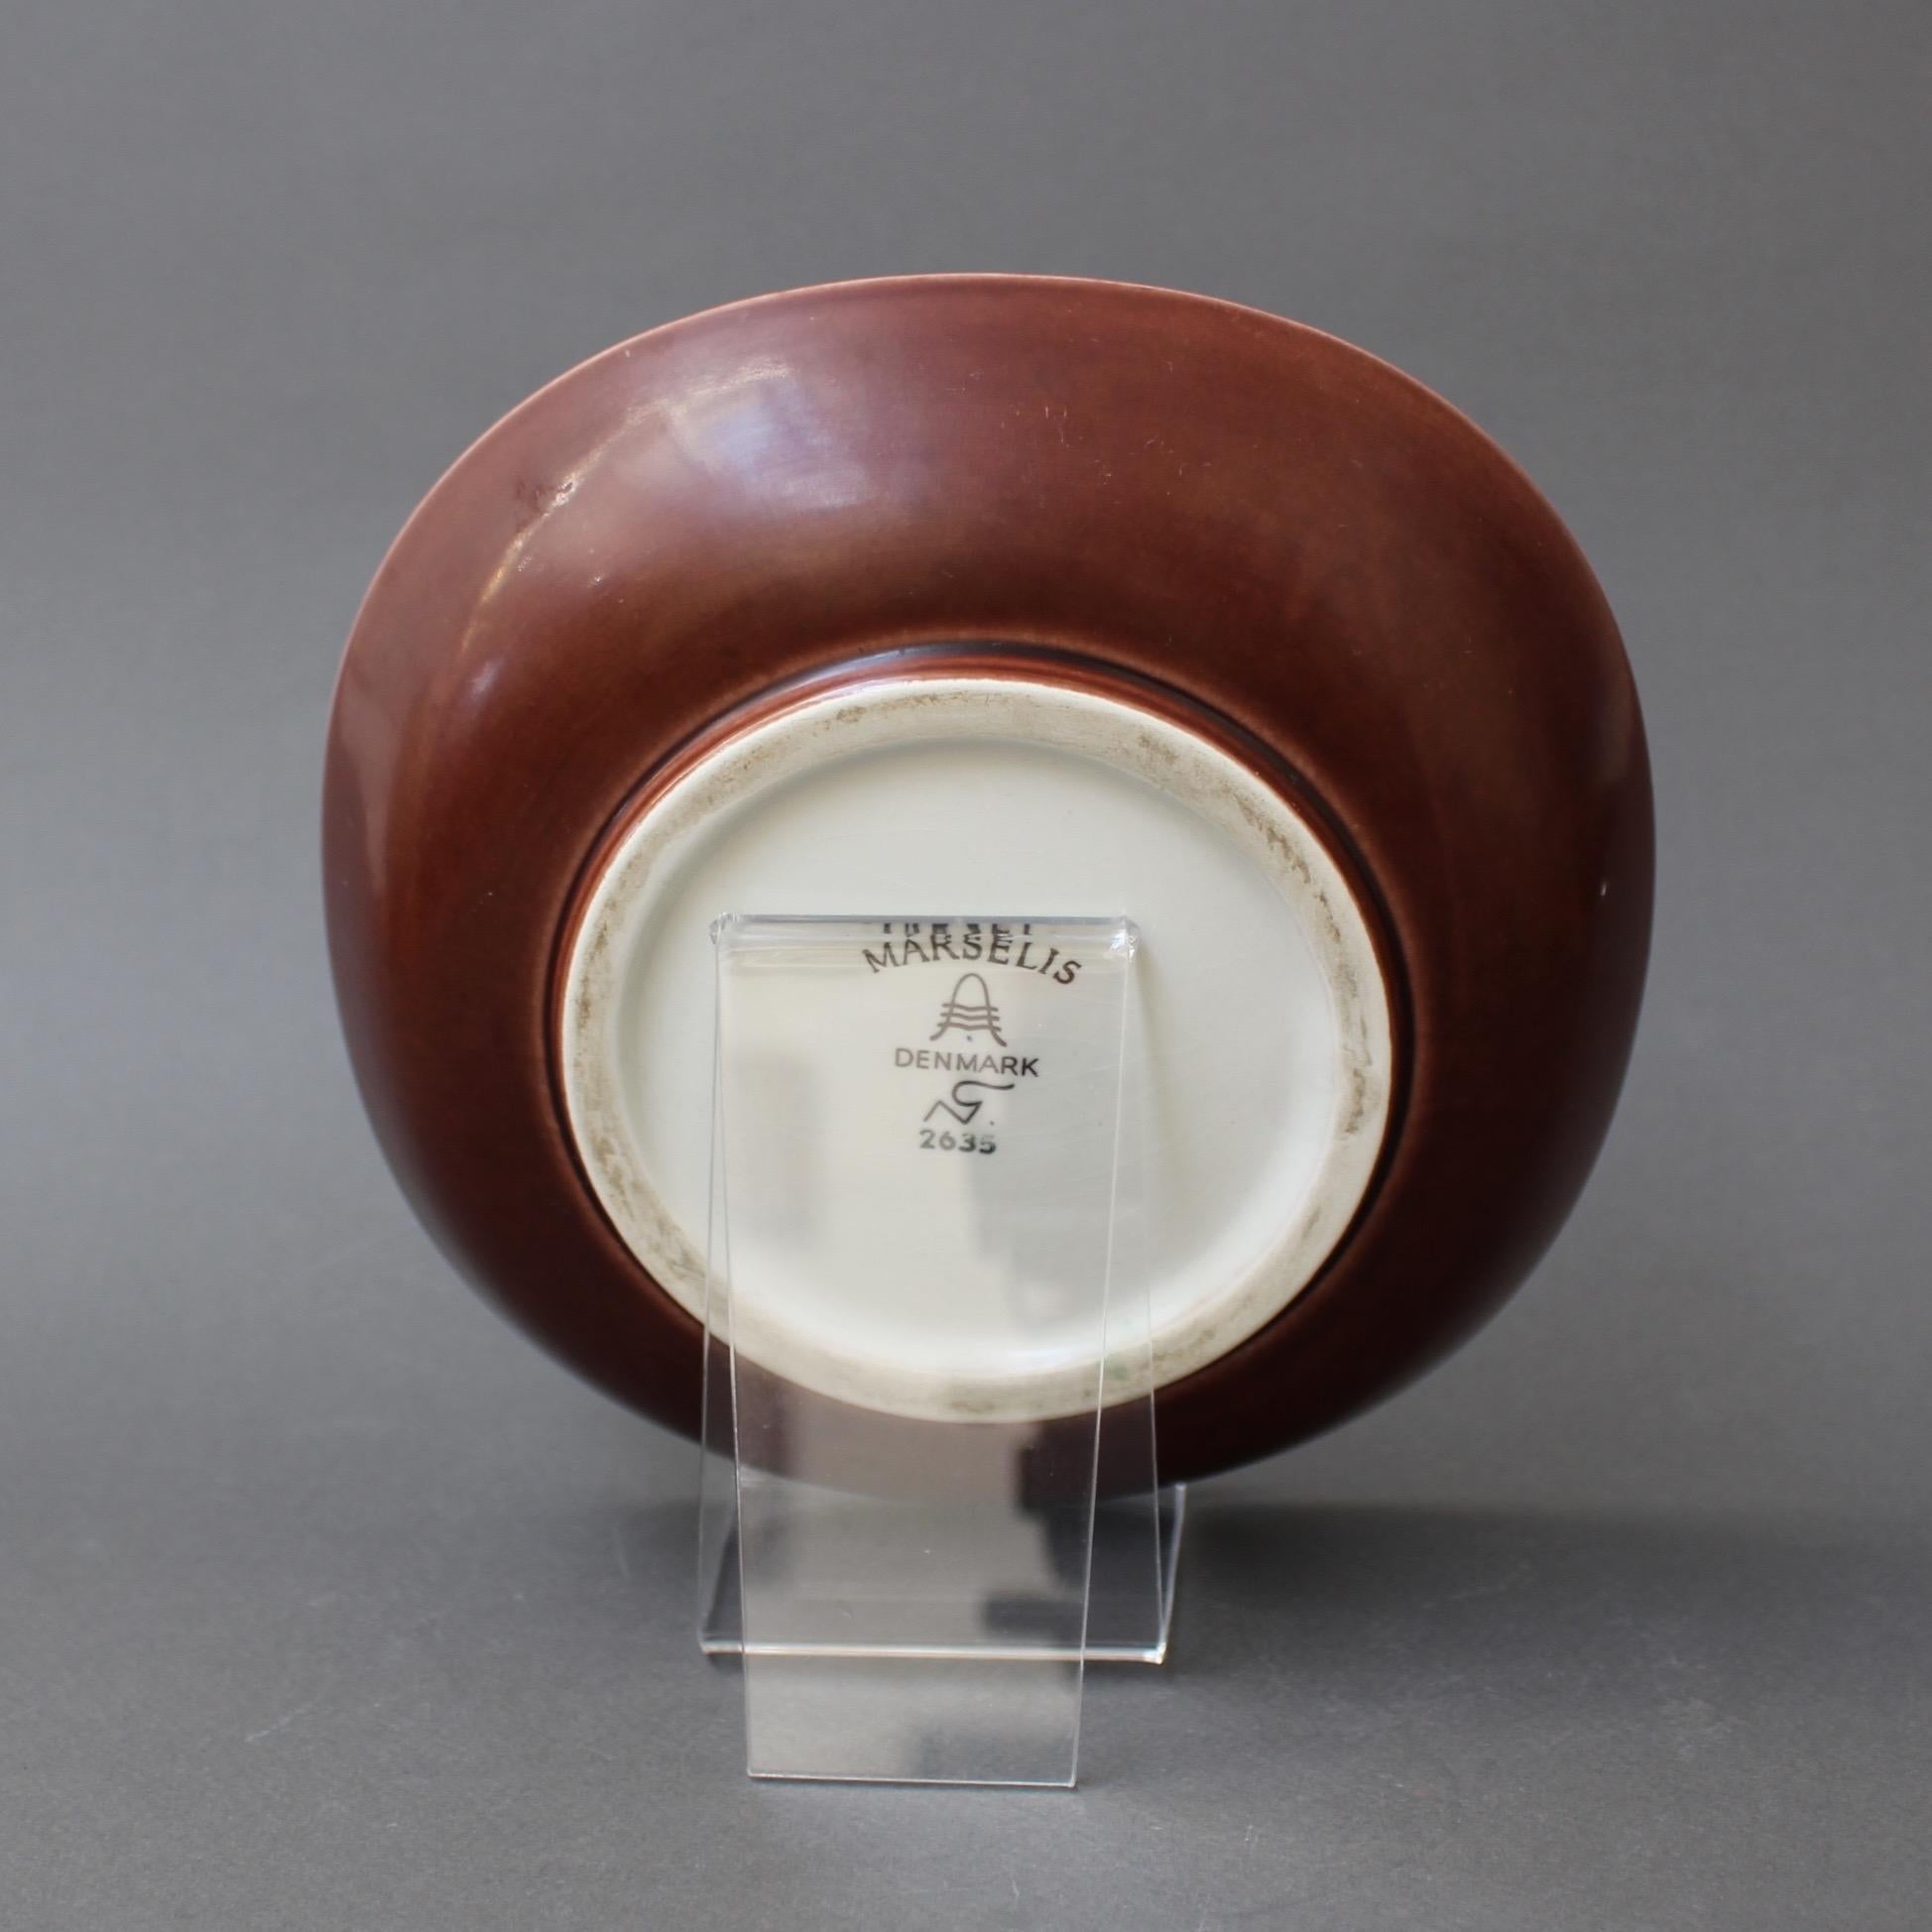 Marselis Porcelain Bowl by Nils Thorsson for Royal Copenhagen, Denmark 2